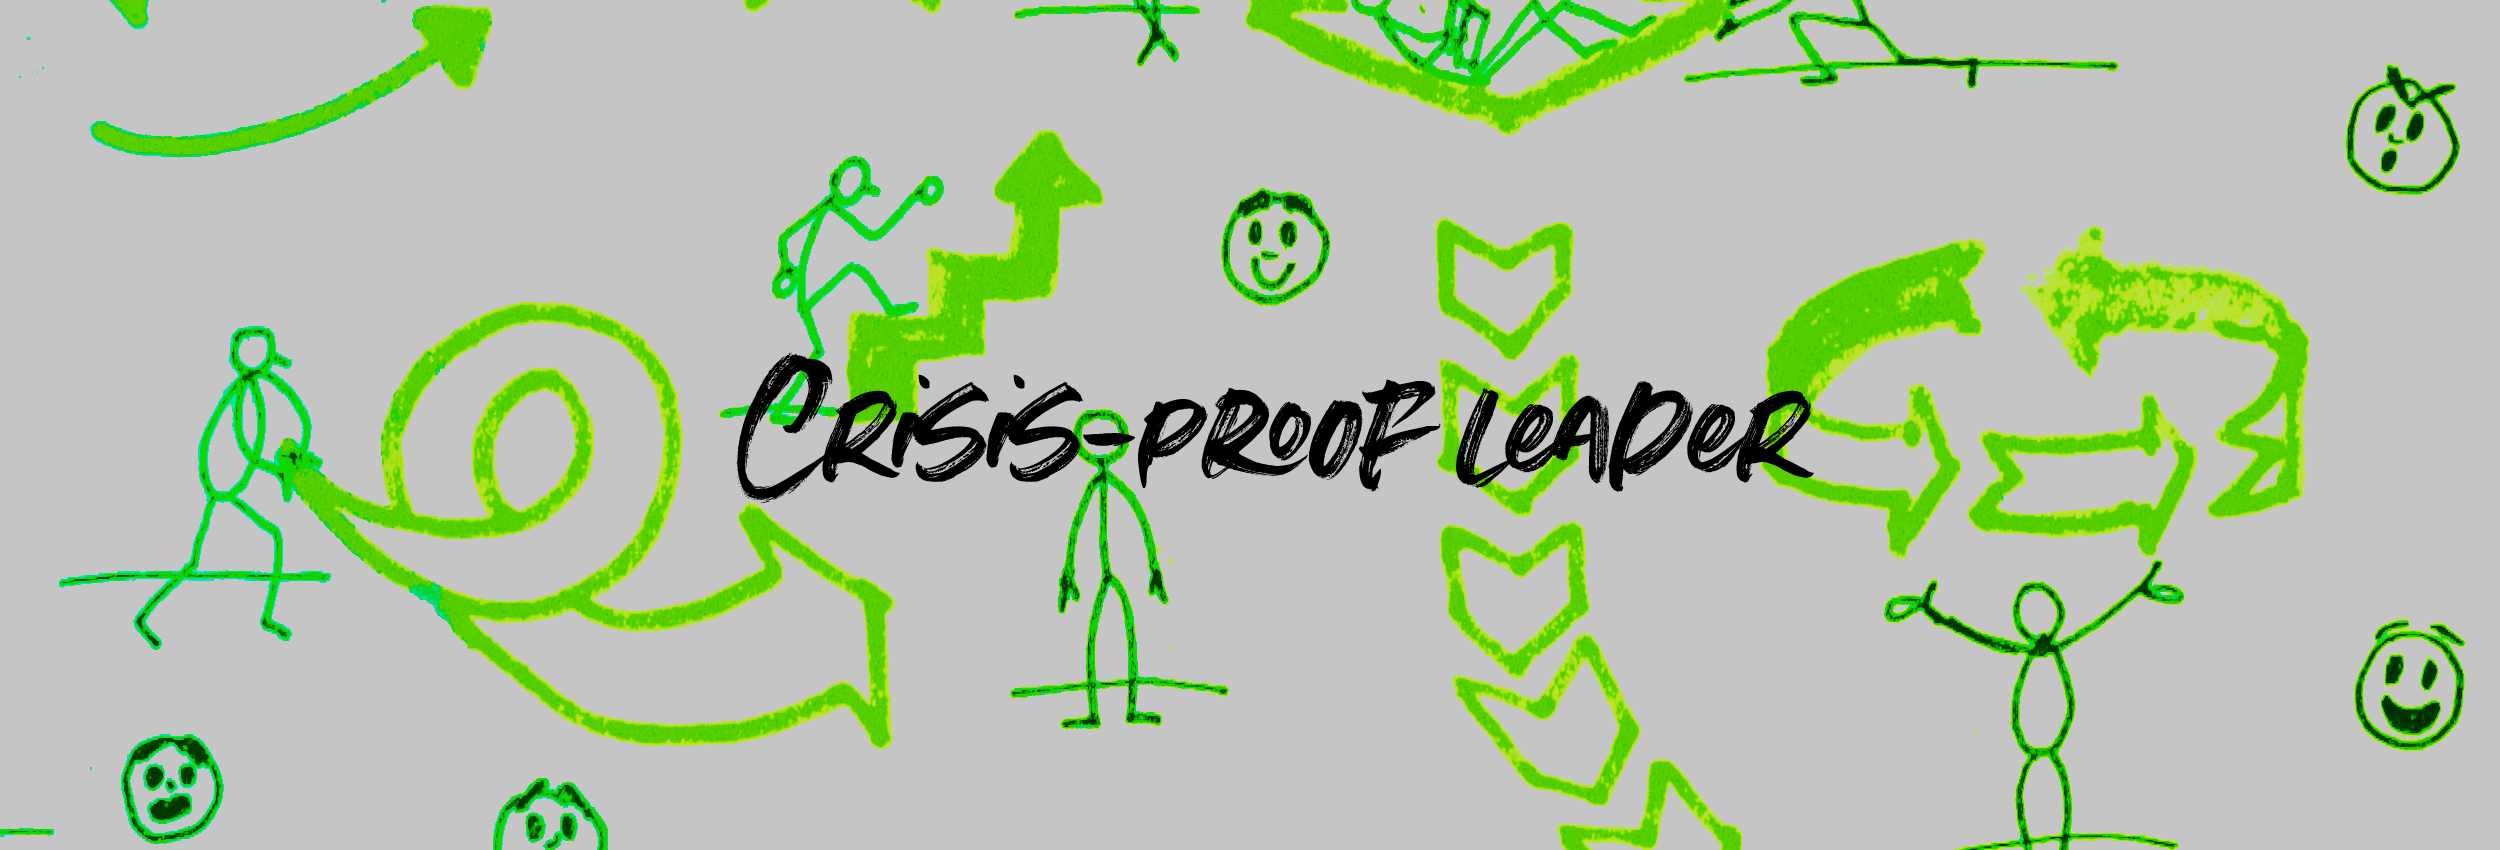 Crisis-proof leaders